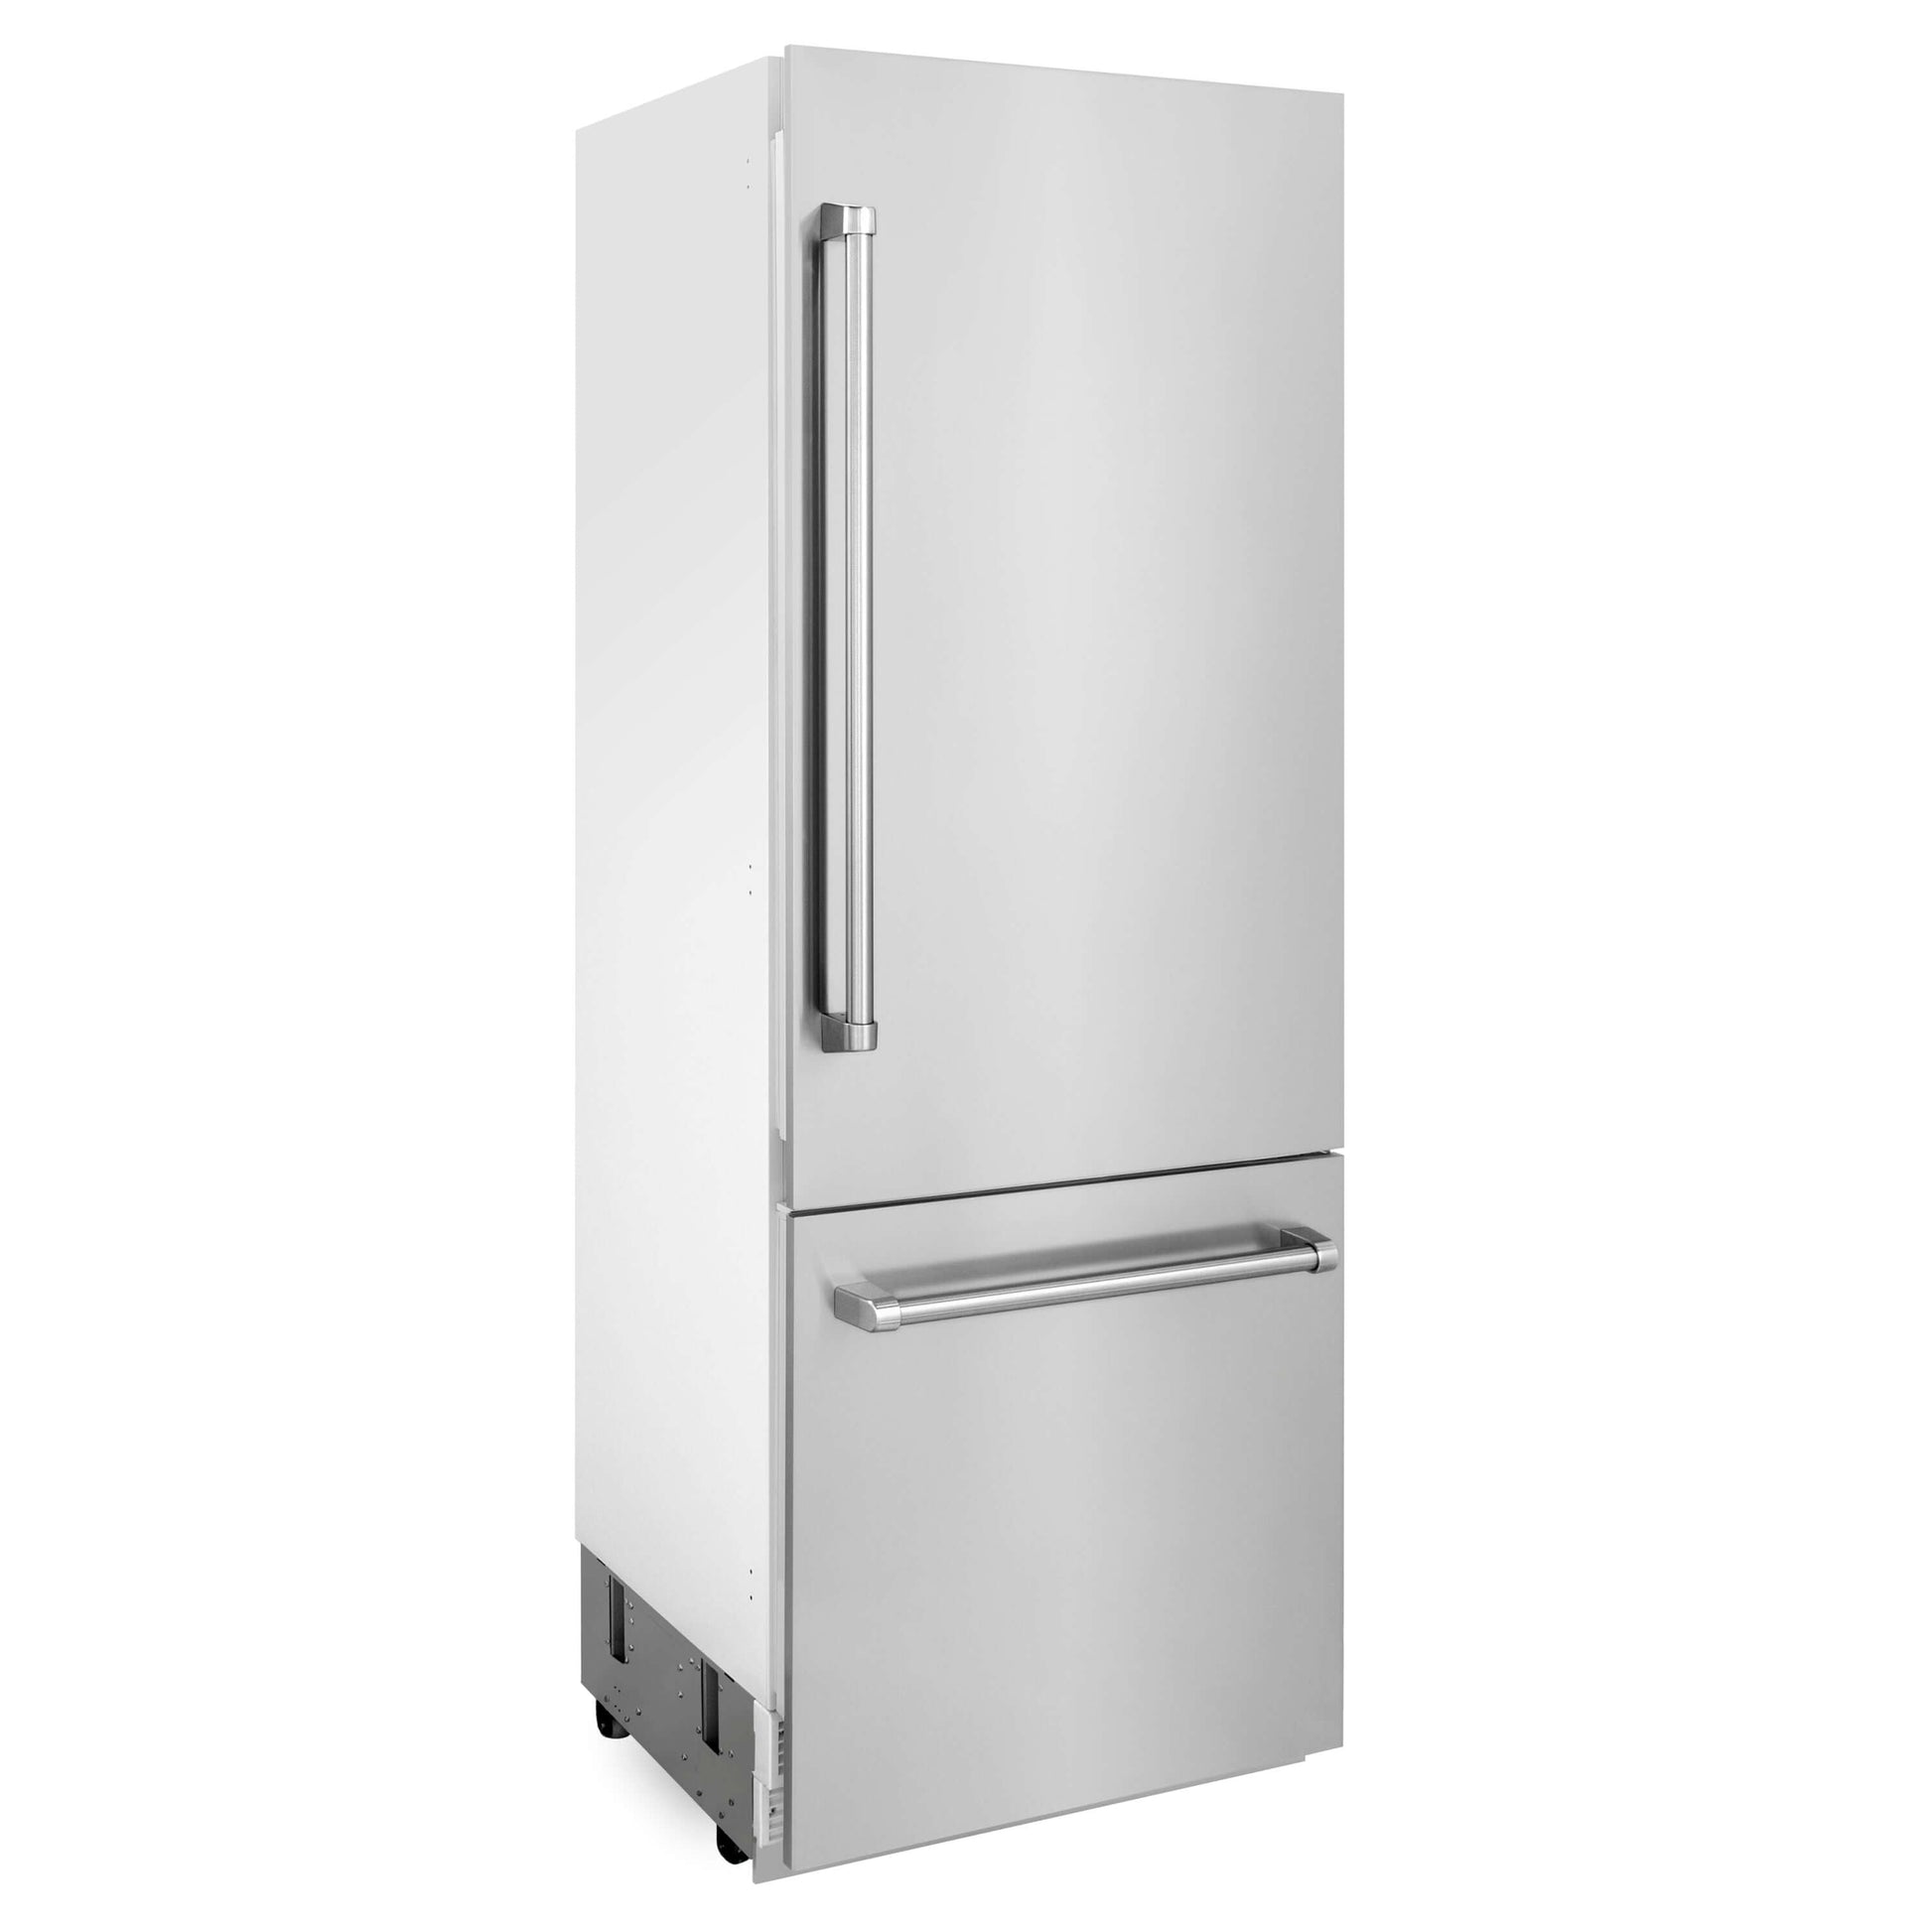 ZLINE 30 in. 16.1 cu. ft. Built-In 2-Door Bottom Freezer Refrigerator with Internal Water and Ice Dispenser in Stainless Steel (RBIV-304-30) side, doors closed.